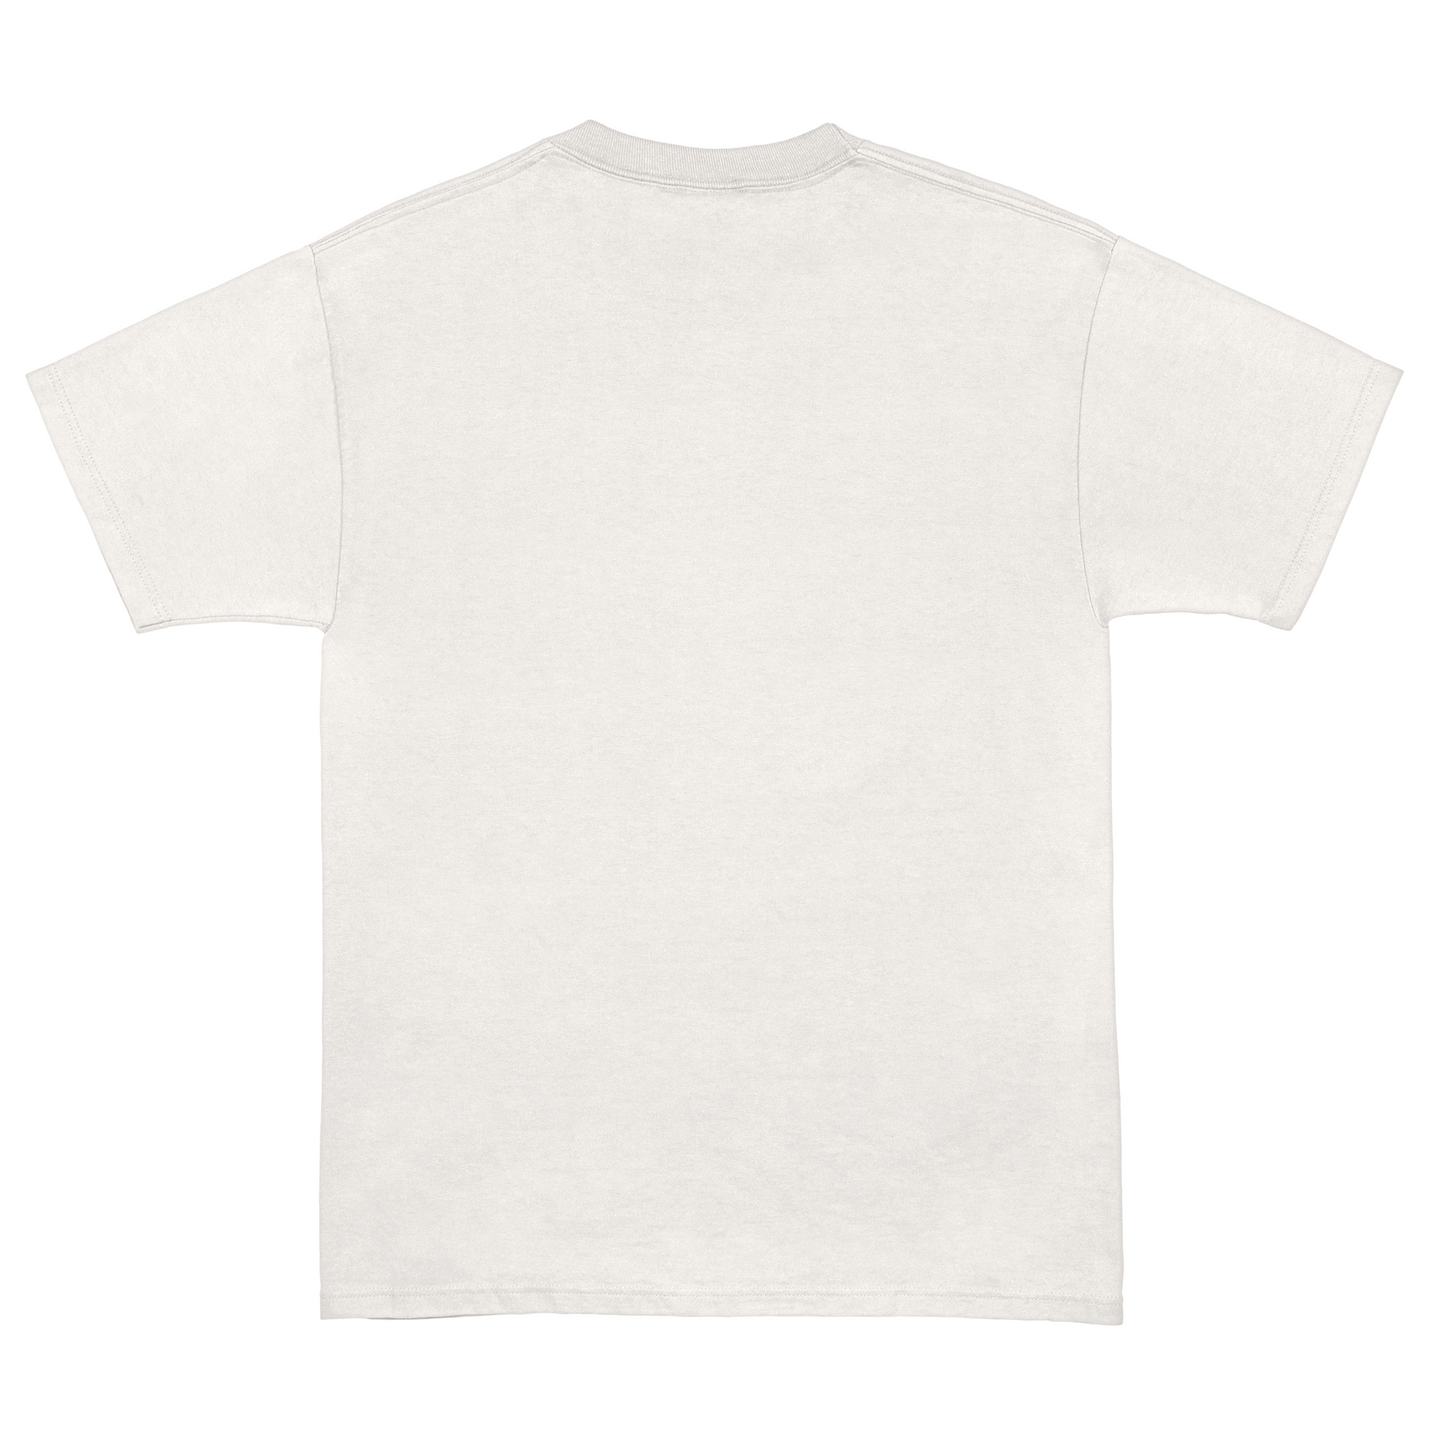 Back View of 10 Hills Studio Unisex 'Dead Society' White Boxy T-Shirt